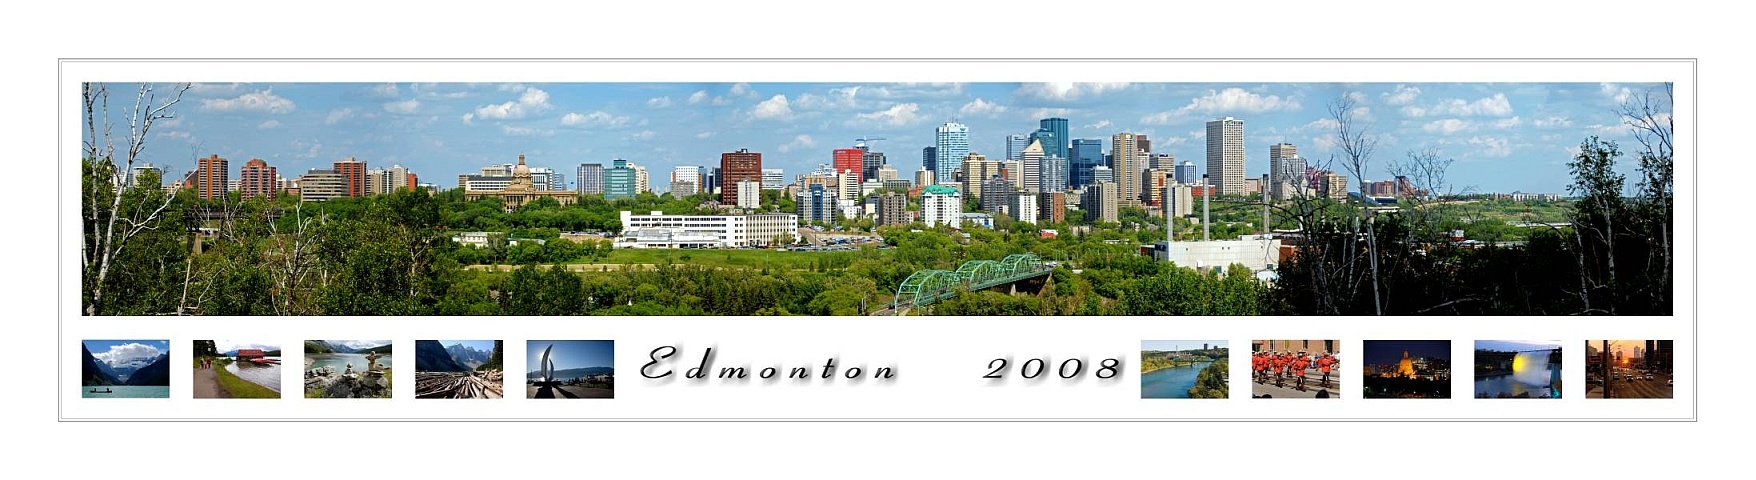 Panorama-Collage Edmonton 2008 "reloaded"